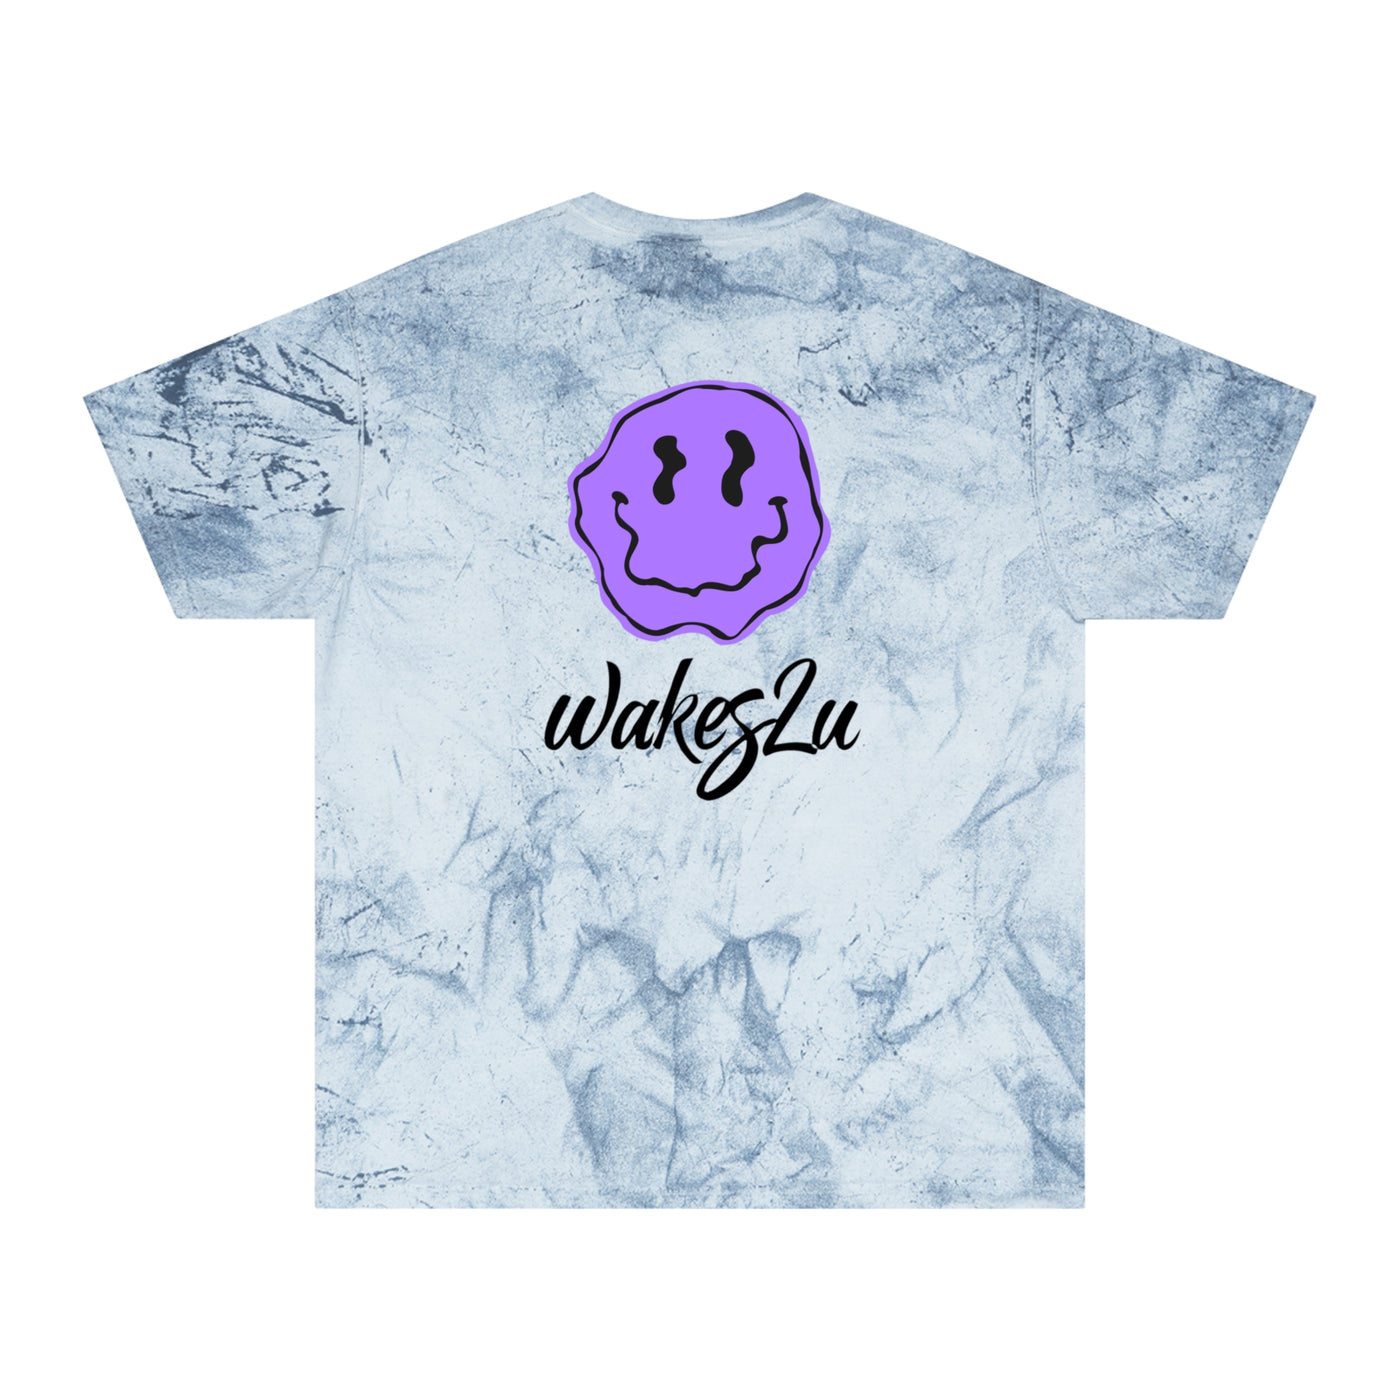 Wakes2u Color Blast "smiley" T-Shirt